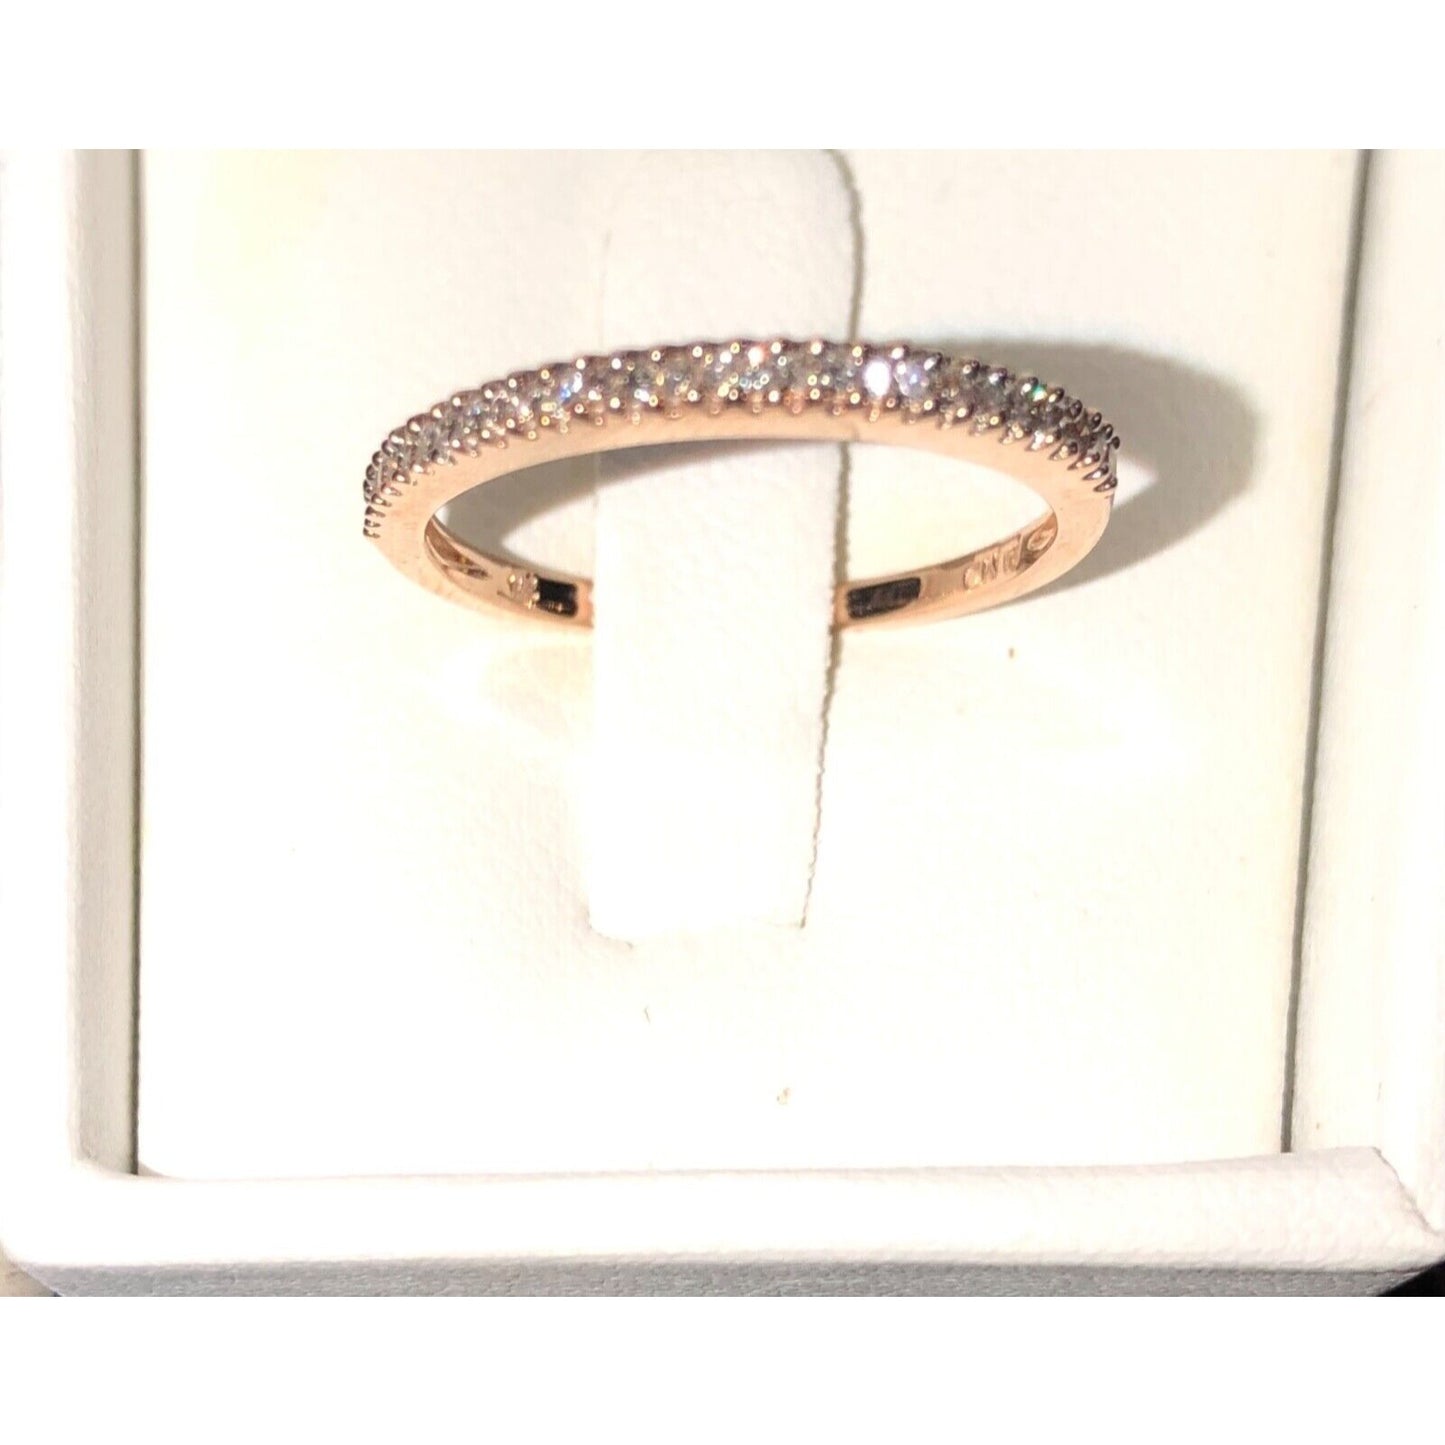 Diamore Women's 14K 1/7 CT TW Diamond Wedding Band - Rose Gold - Size: 9 - Variety Sales Etc.